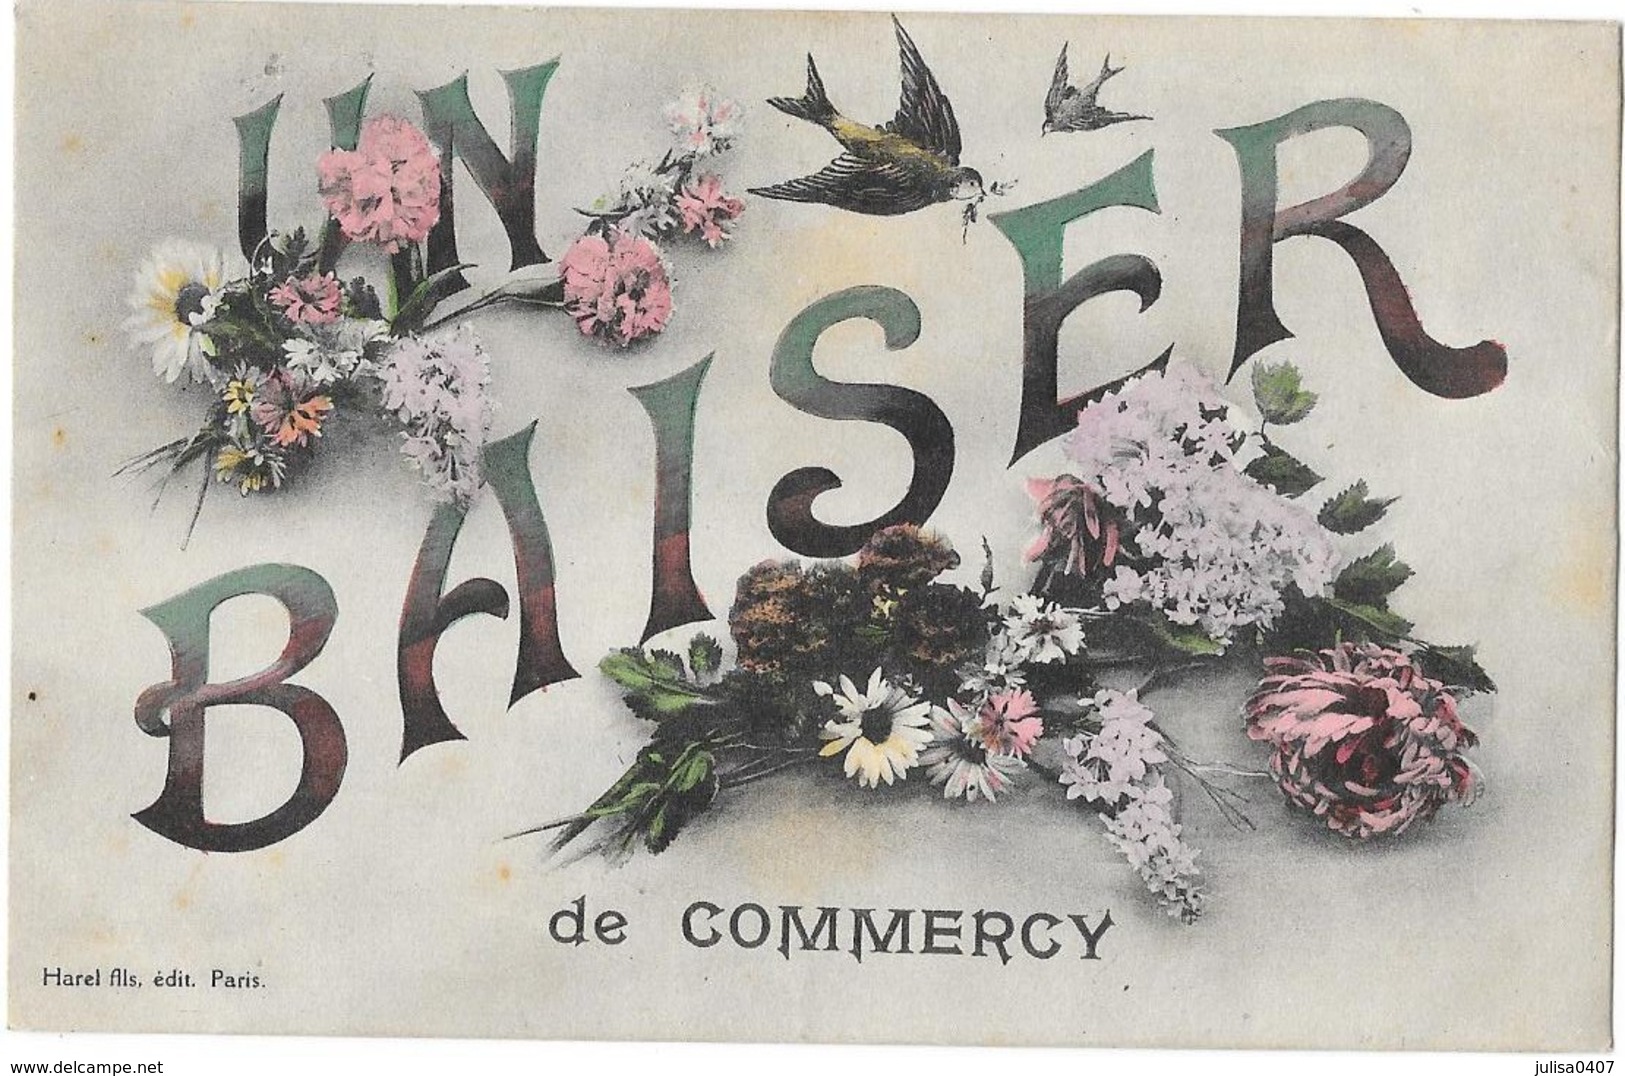 COMMERCY (55) Carte Fantaisie Baiser De - Commercy